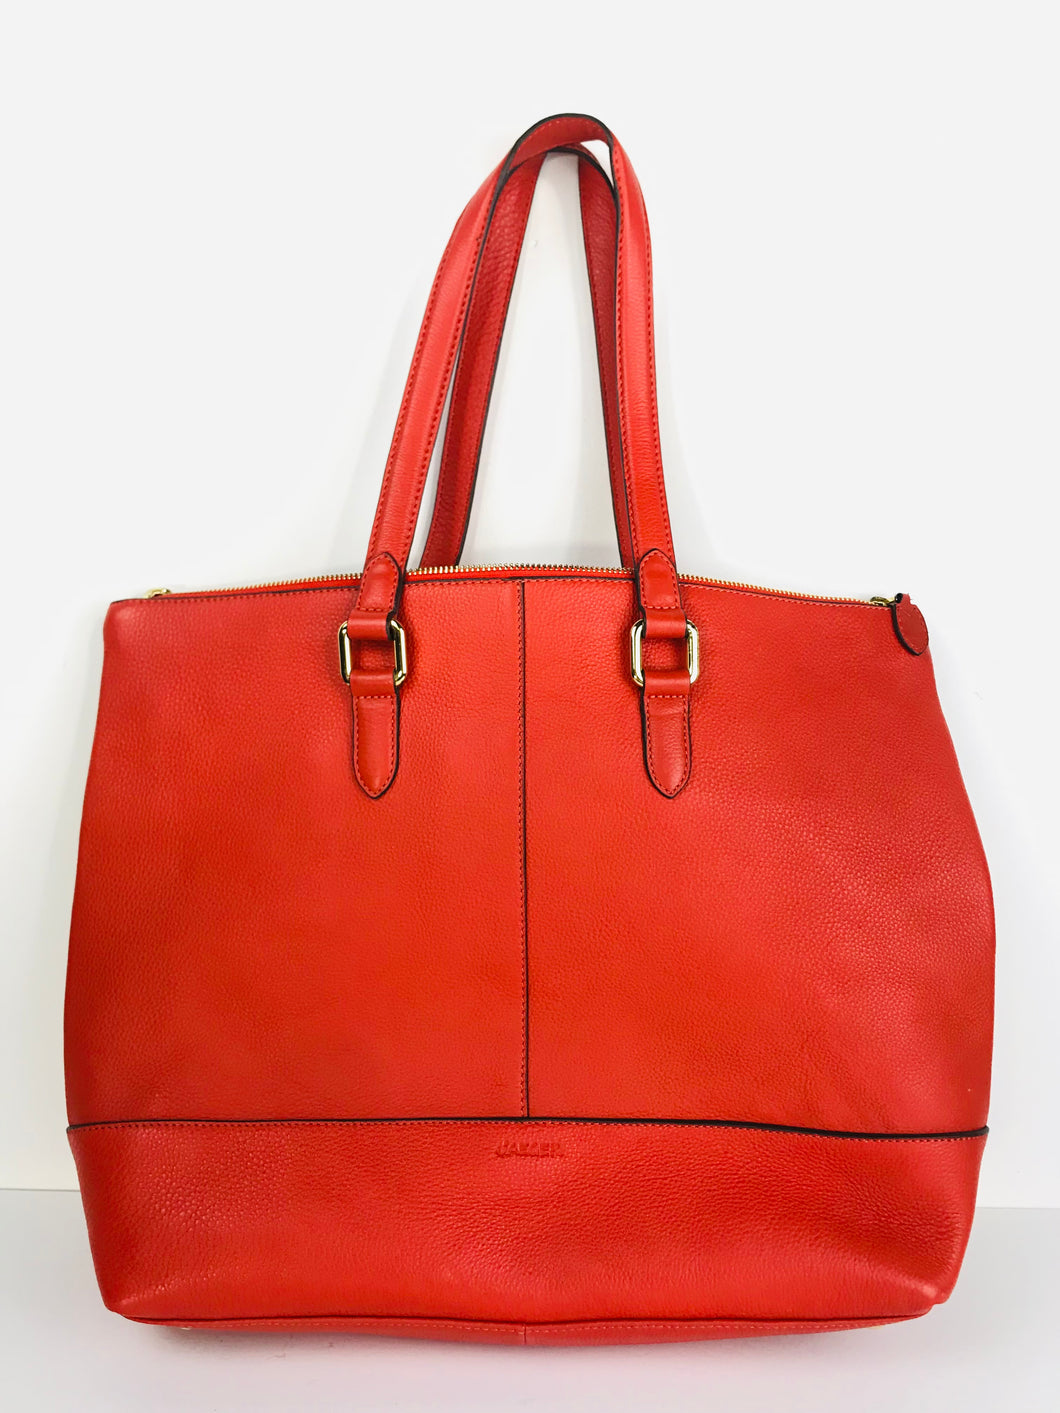 Jaeger Women's Leather Tote Bag | Large | Orange